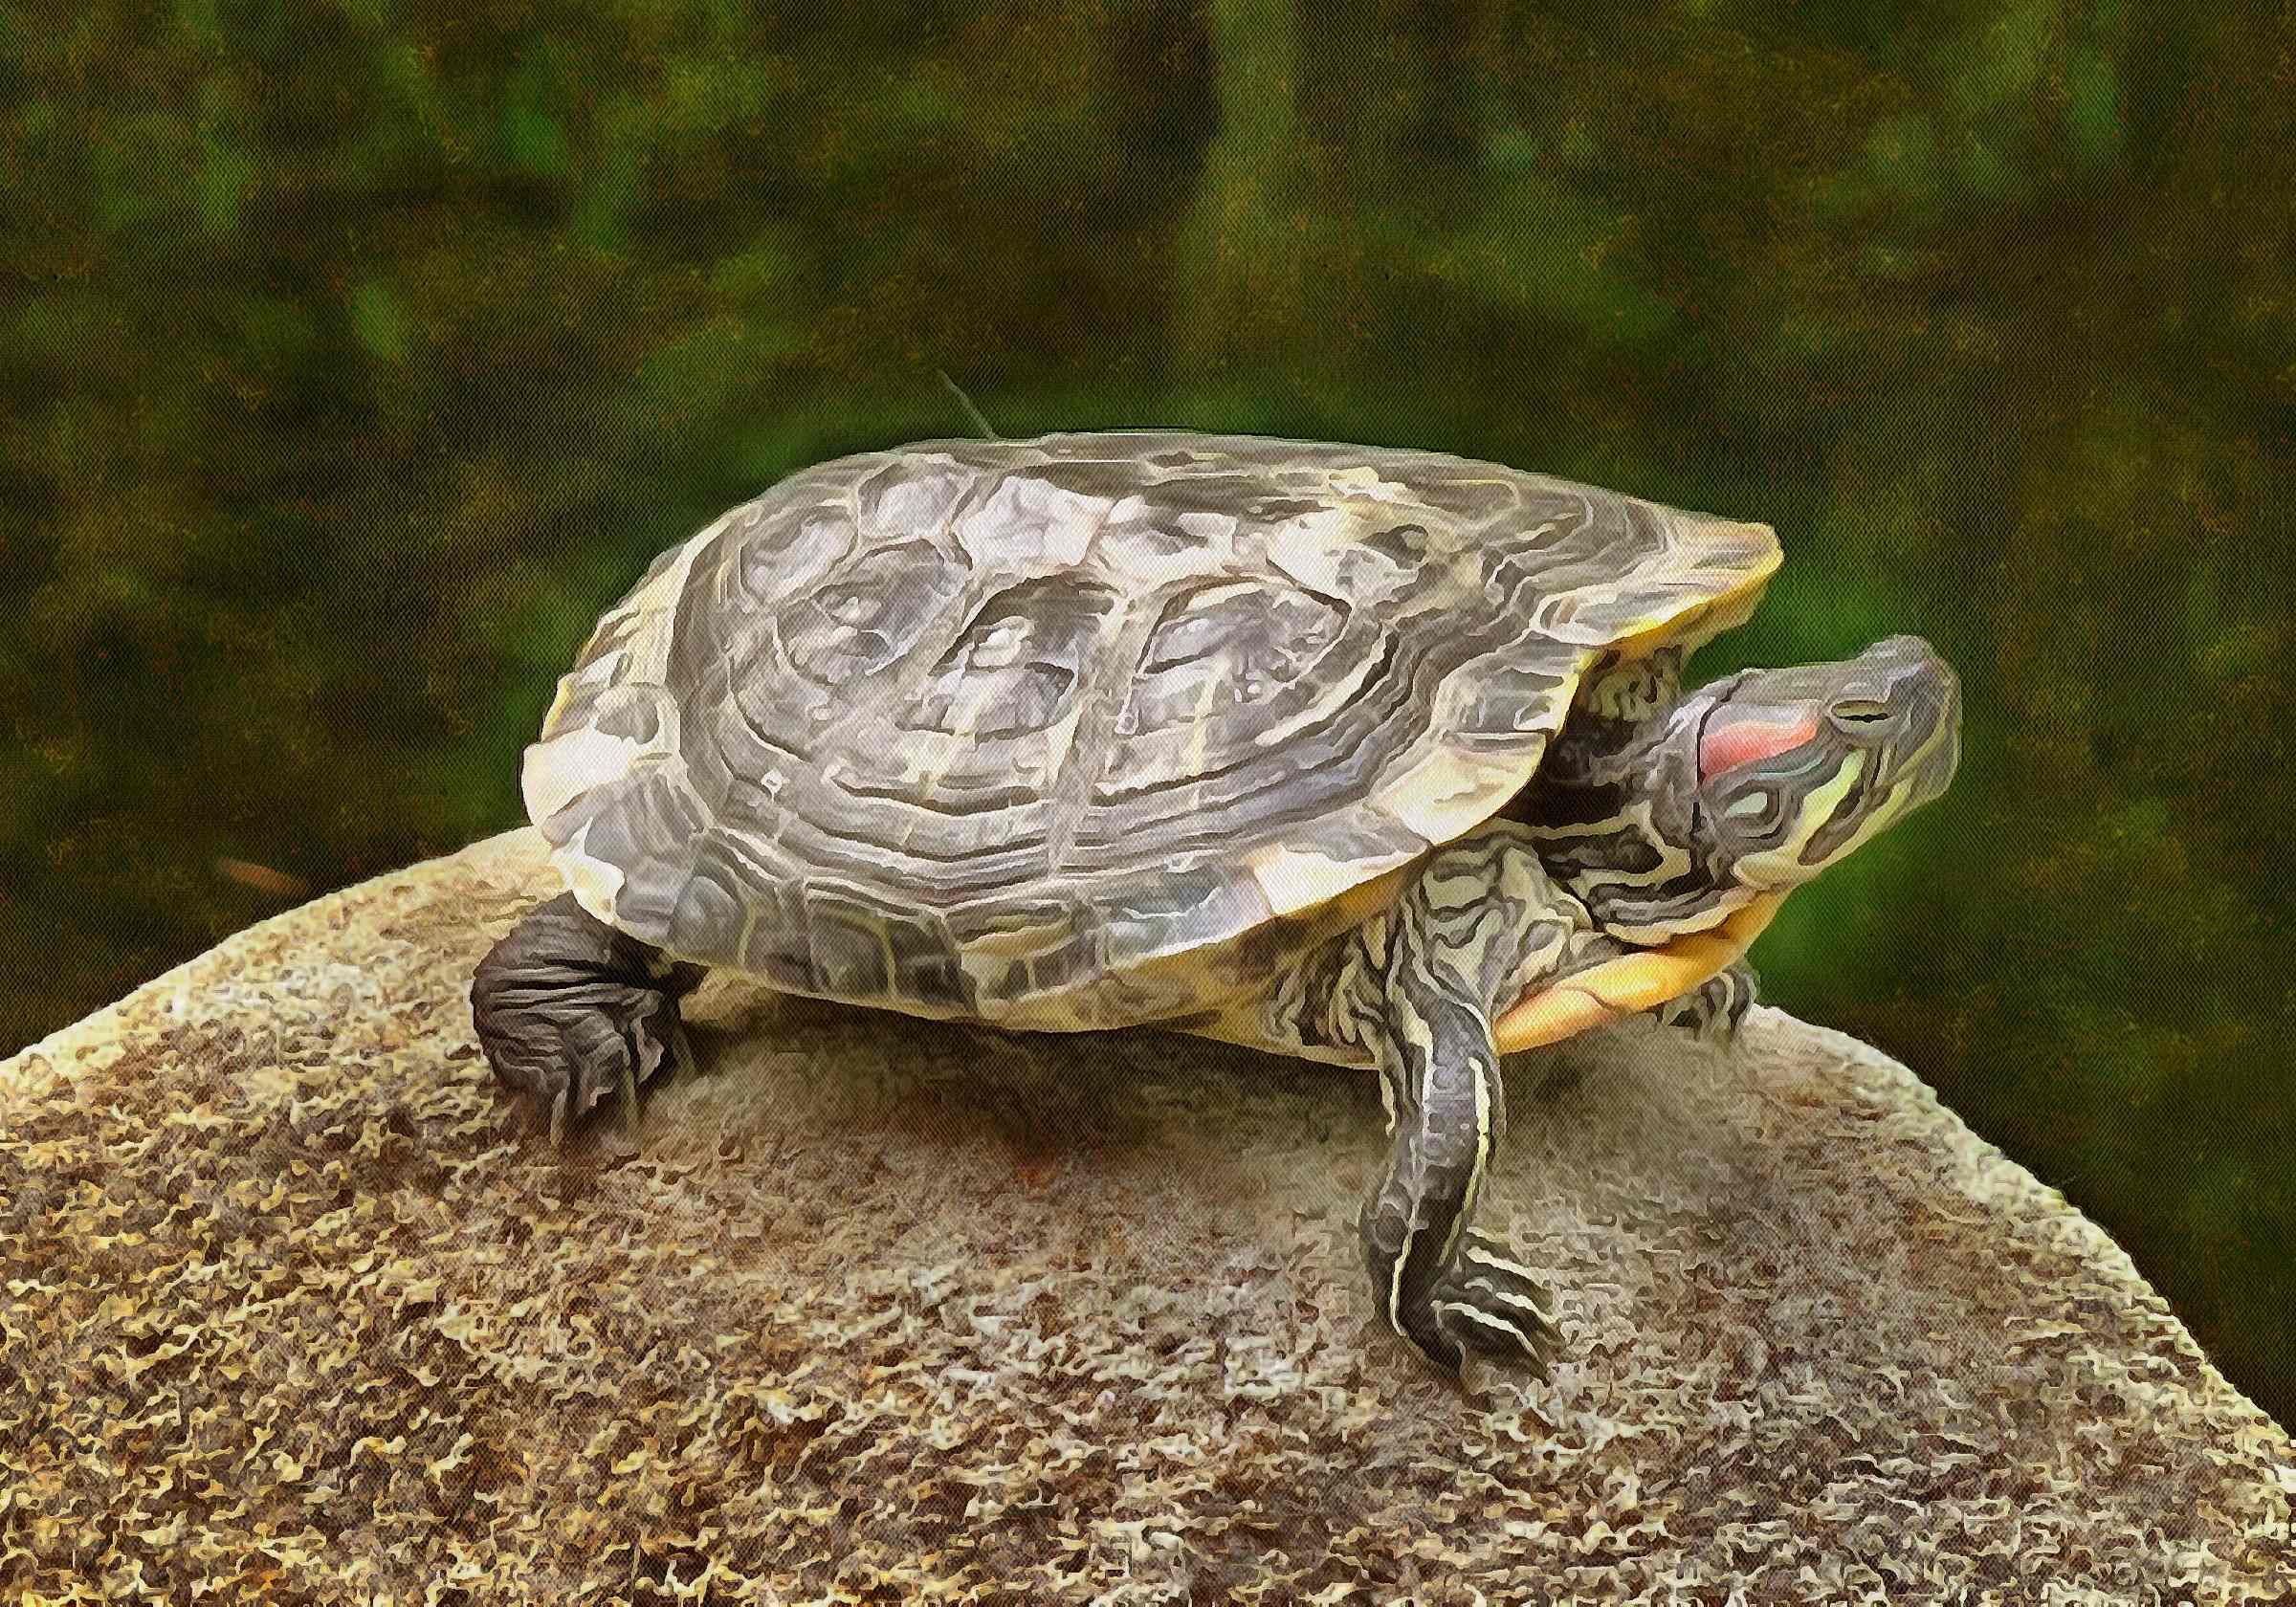 Free Tortoise images, Turtle free images,  –  Turtle stock free images, free images turtles, tortoise public domain images, Turtle public domain images, Tortoise free ,!